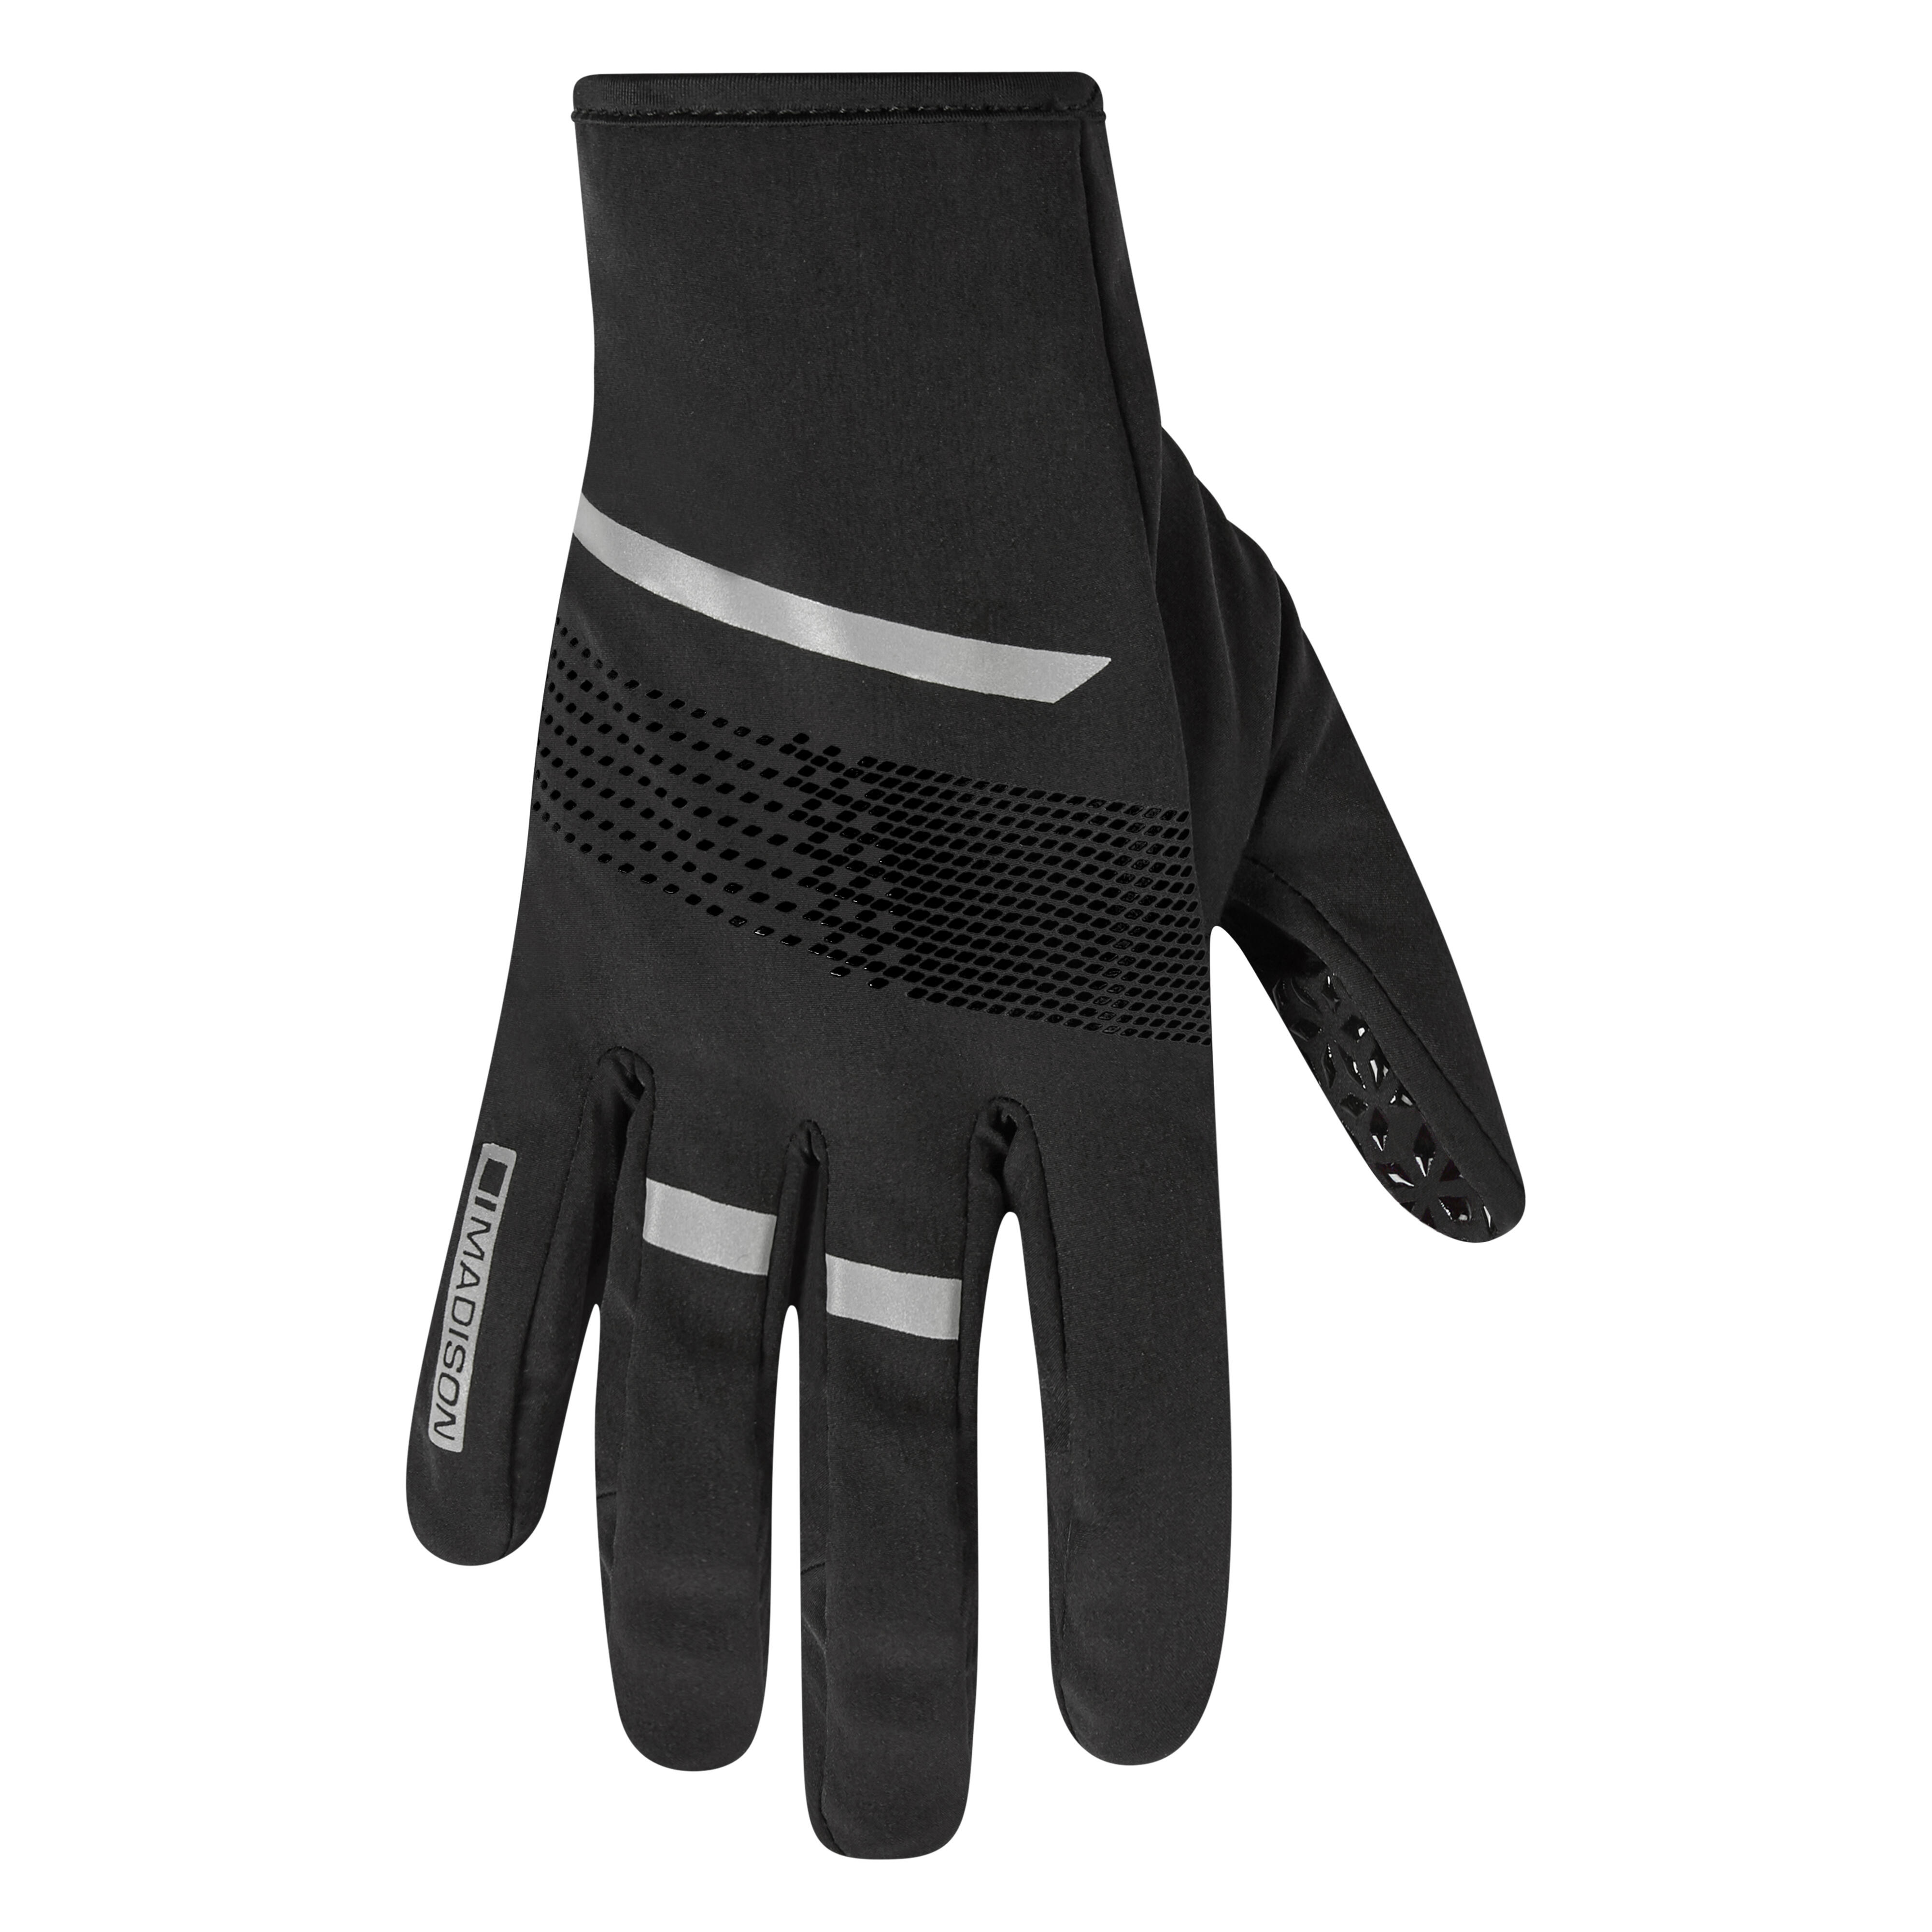 Decathlon UK Madison Element Cycling Gloves - Black